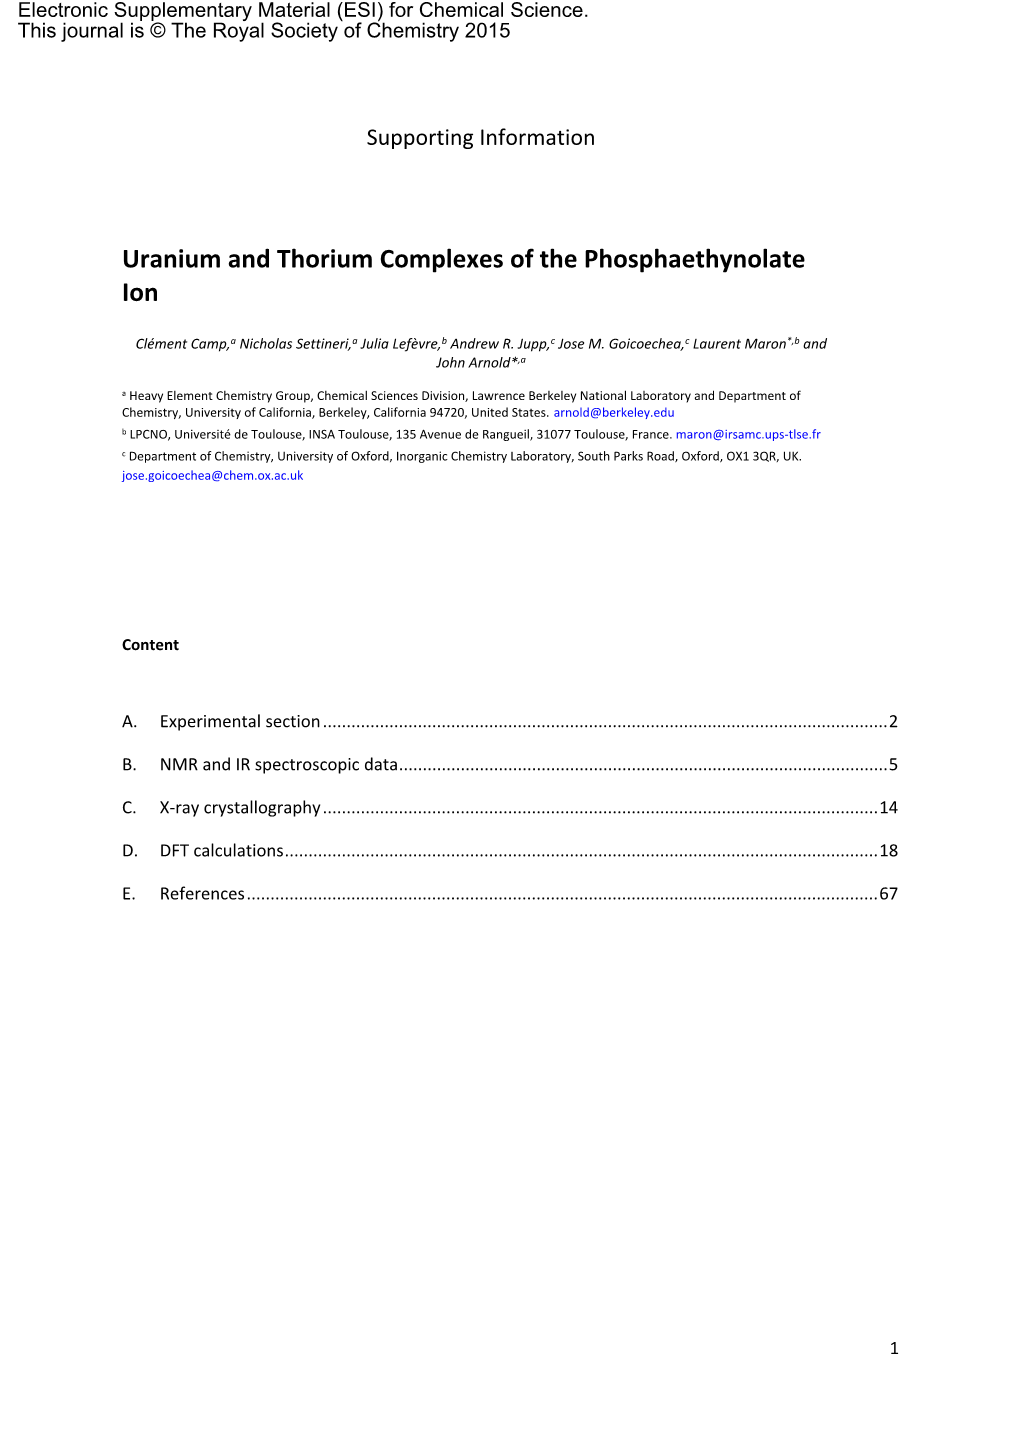 Uranium and Thorium Complexes of the Phosphaethynolate Ion